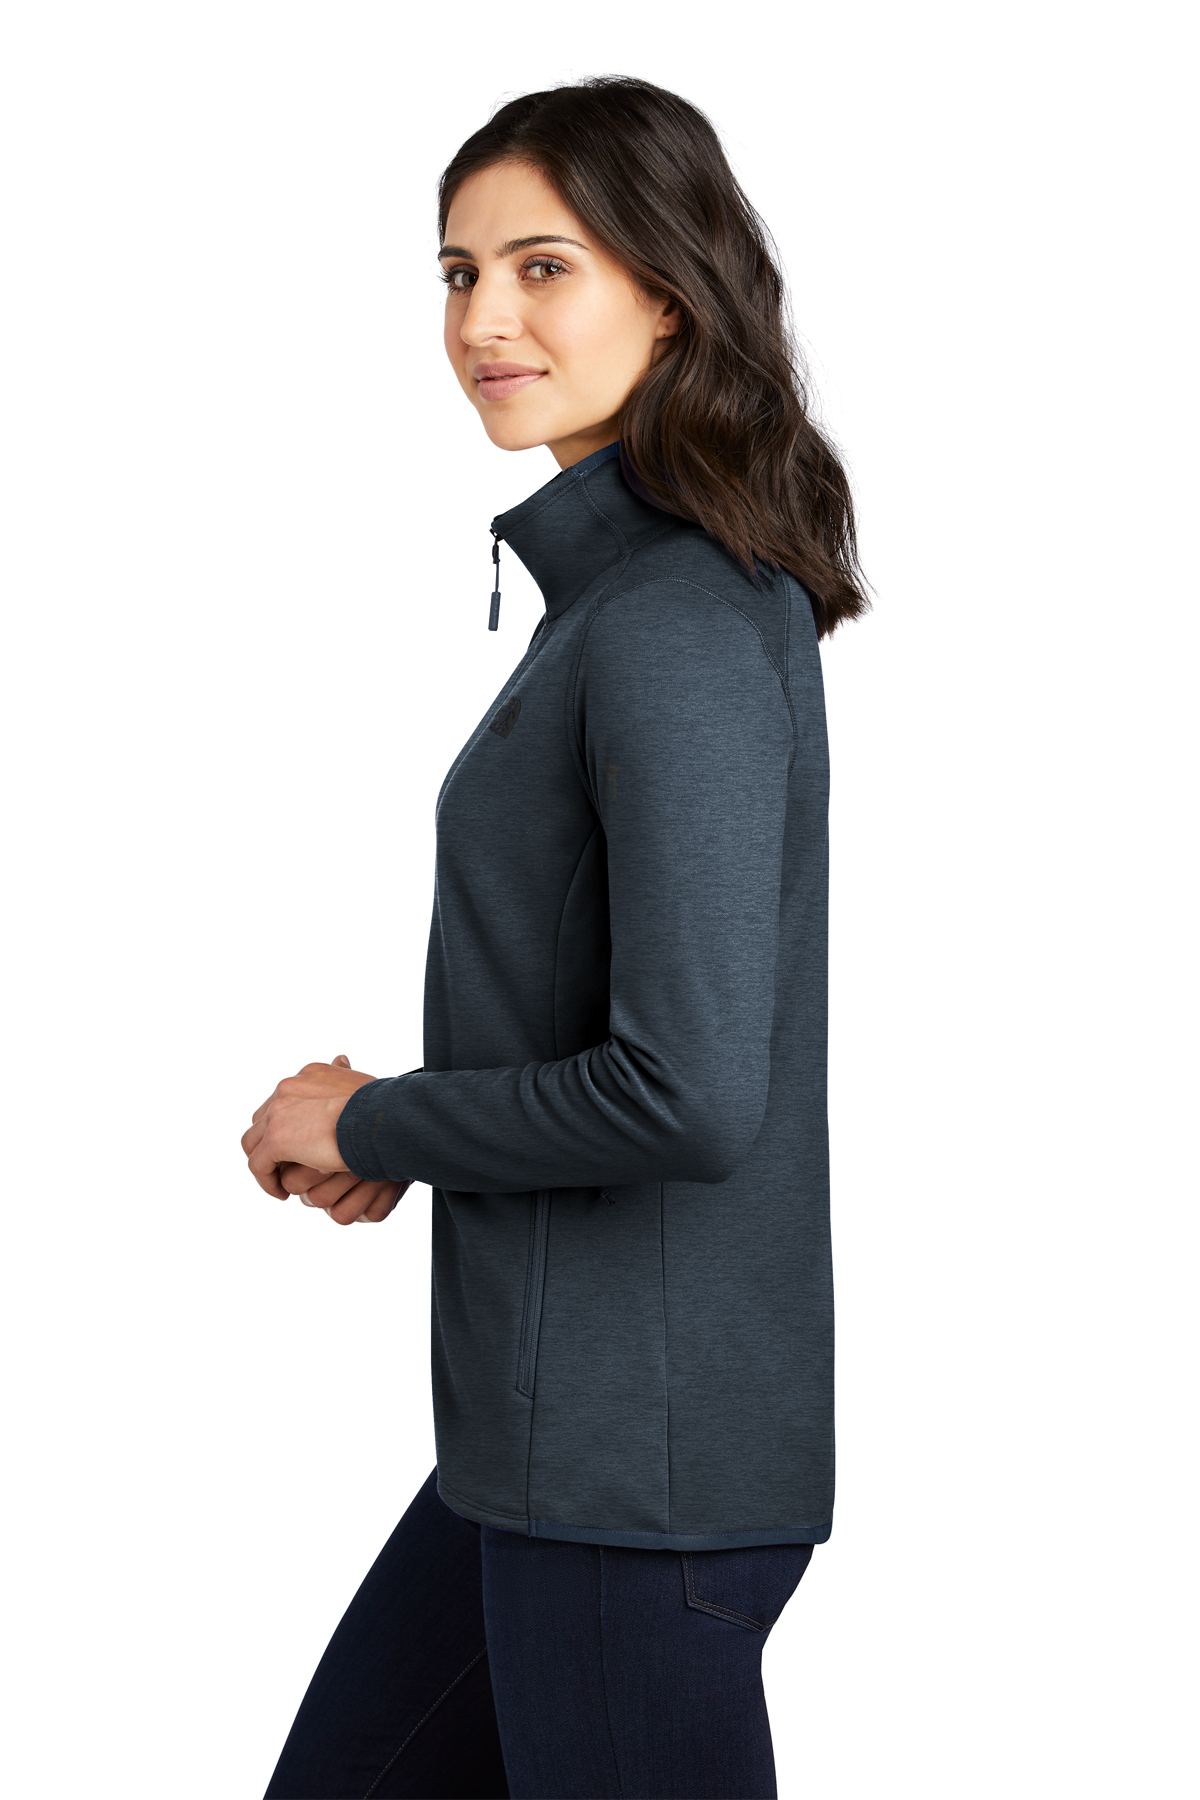 The North Face Ladies Skyline Full-Zip Fleece Jacket | Product ...